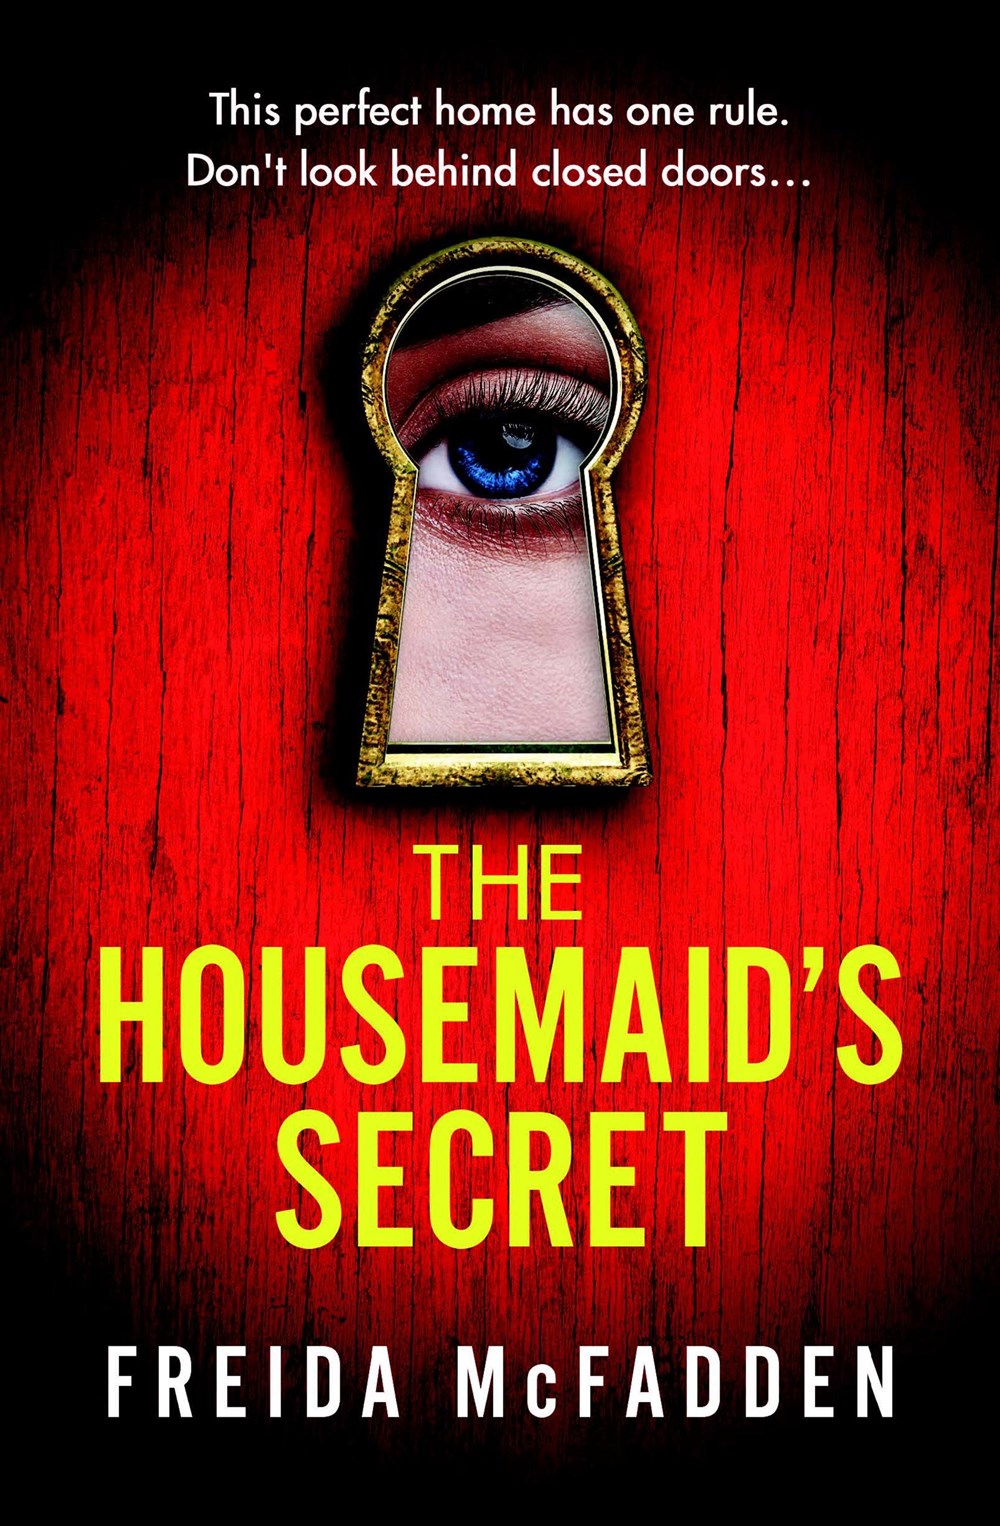 Book Review: The Housemaid's Secret by Freida McFadden